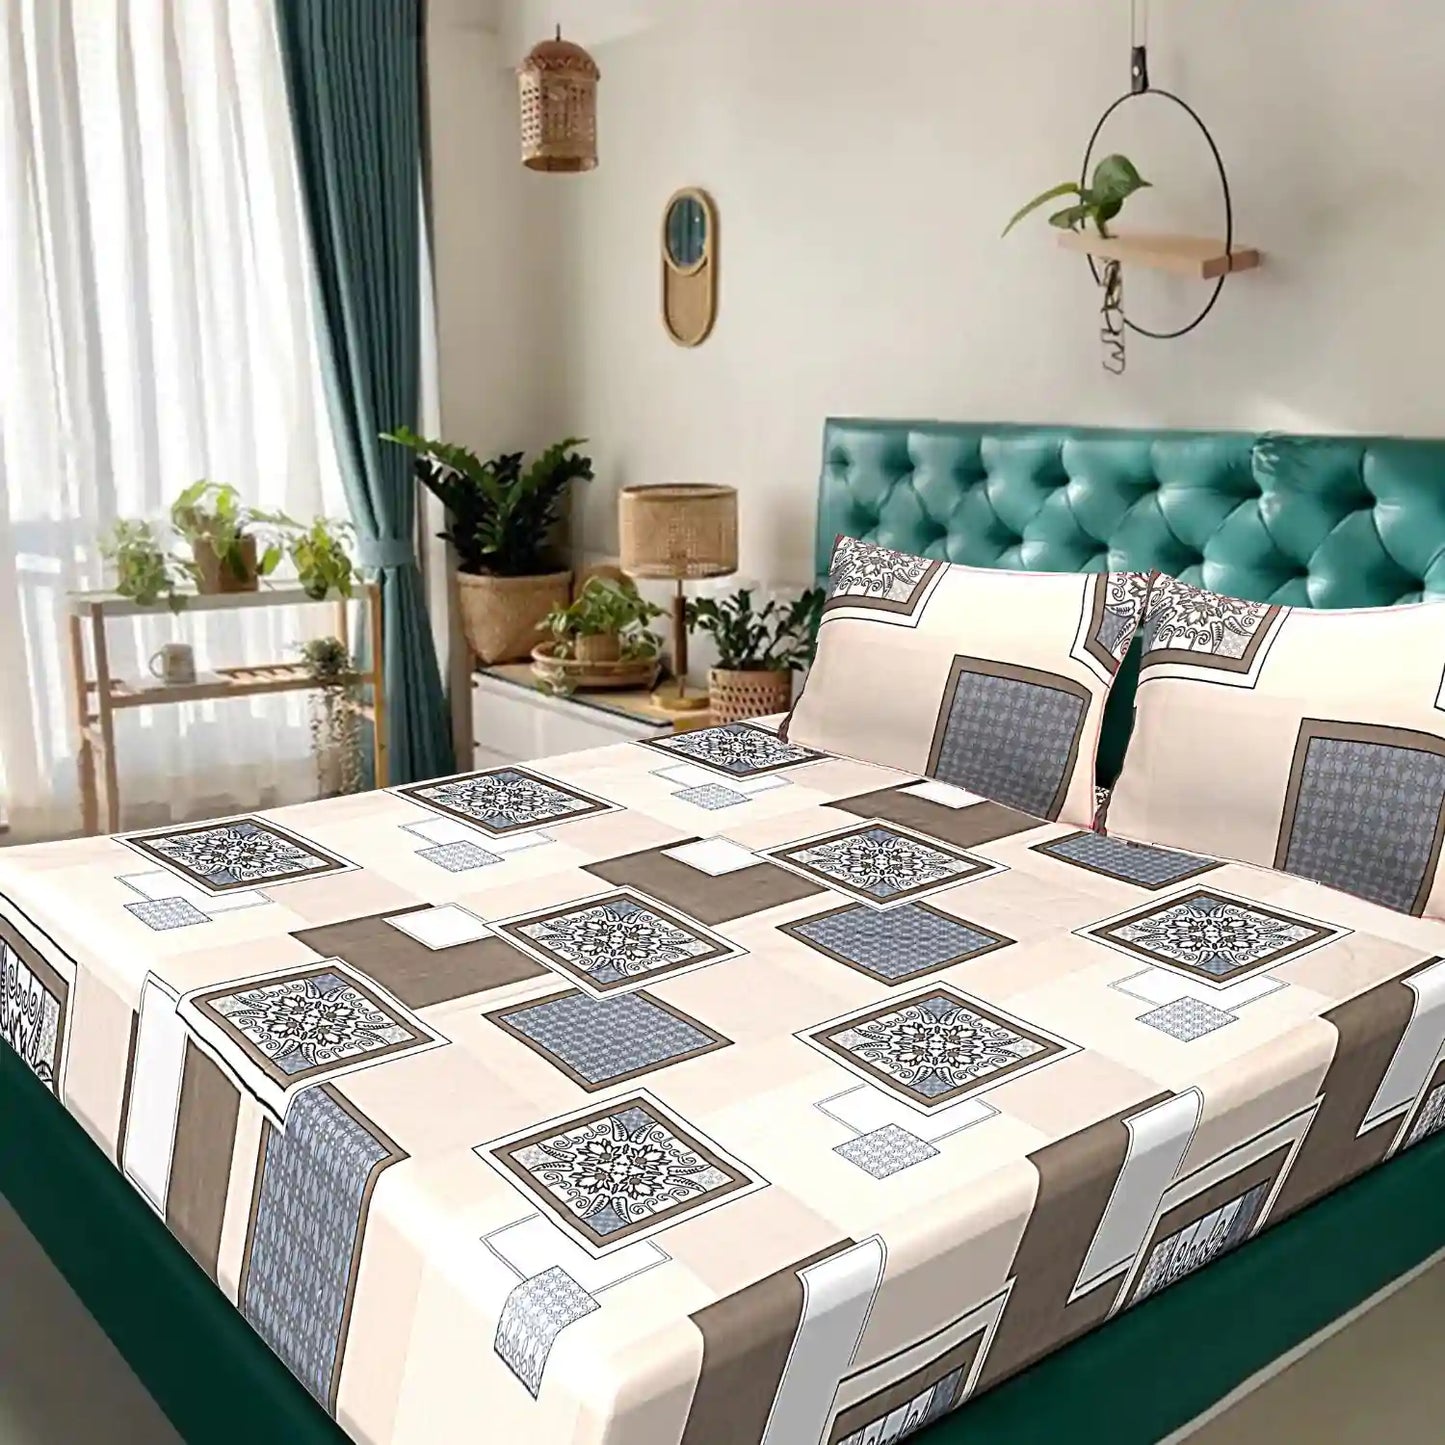 Chaen Checkered Double Bed Bedsheet